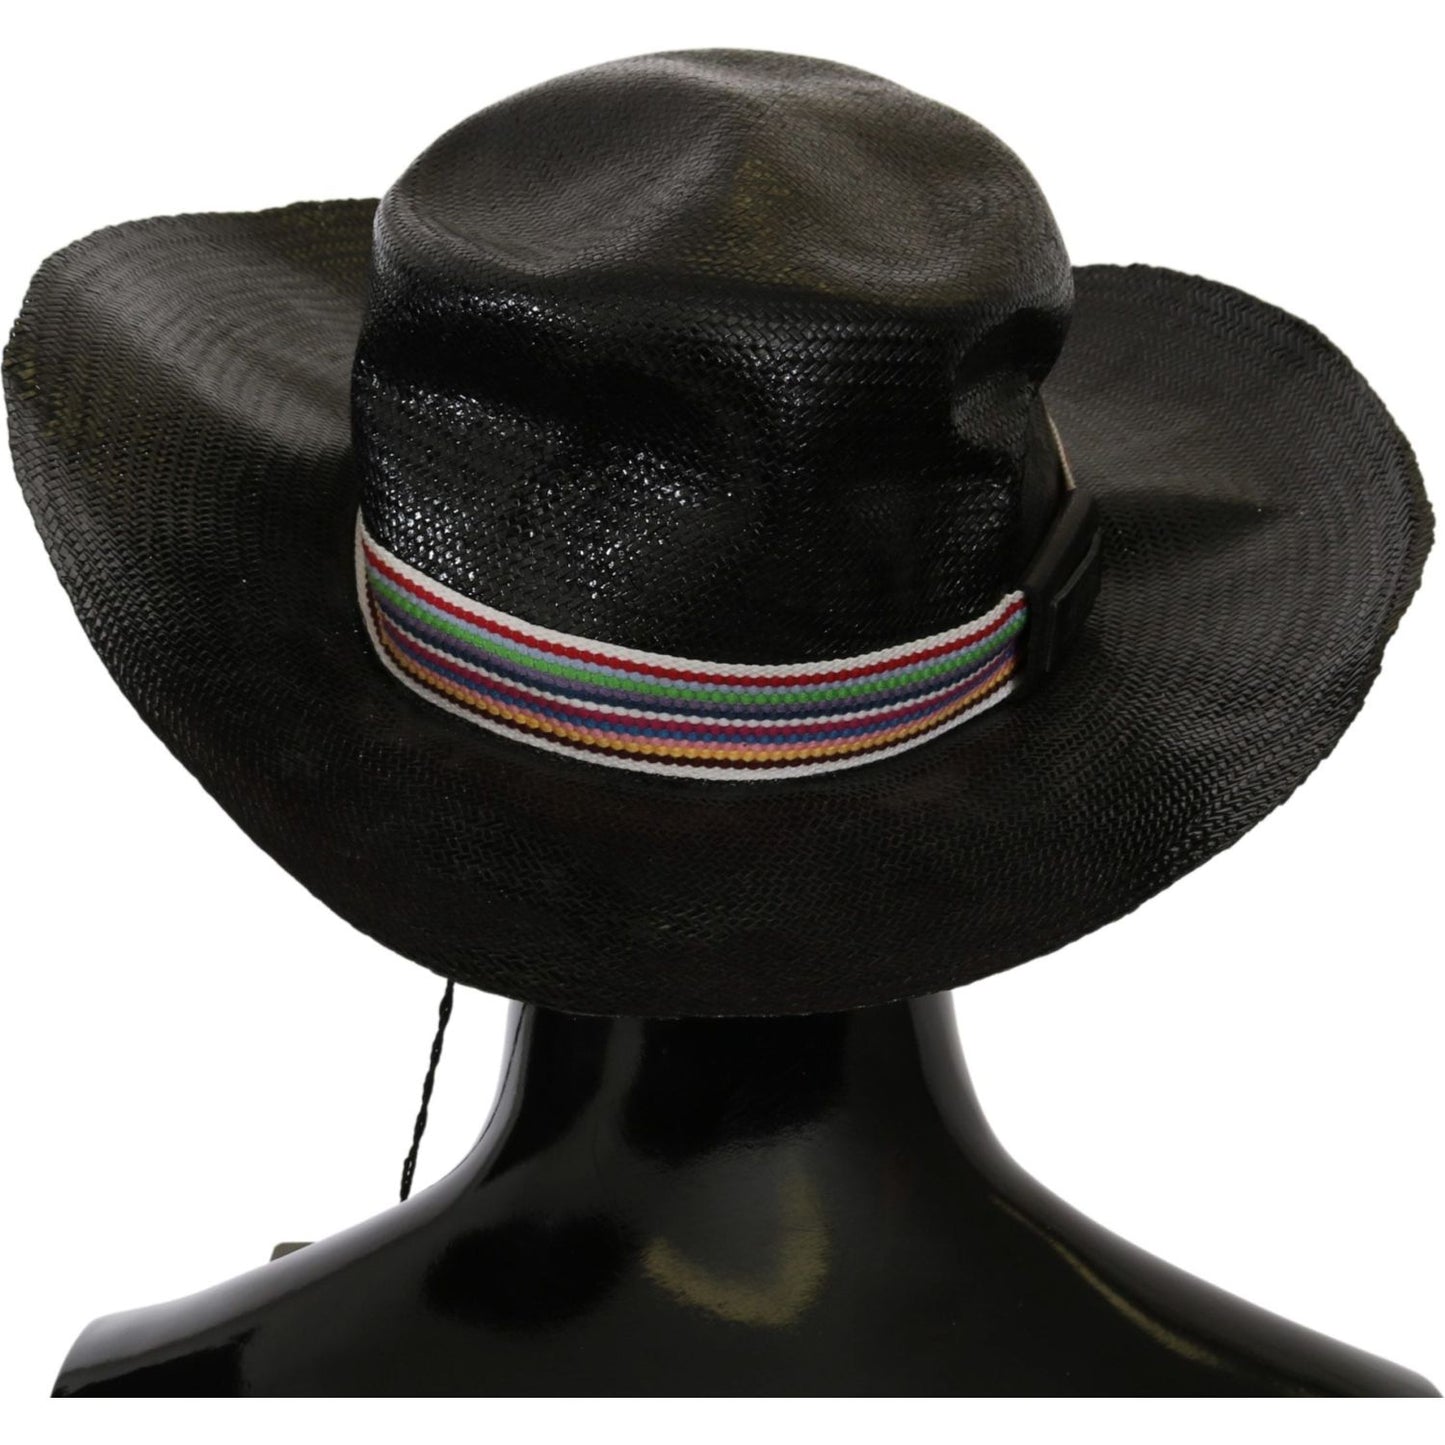 Costume National Chic Black Floppy Hat - Timeless Elegance black-wide-brim-cowboy-solid-hat Hat IMG_0921-scaled-0f7cff67-959.jpg